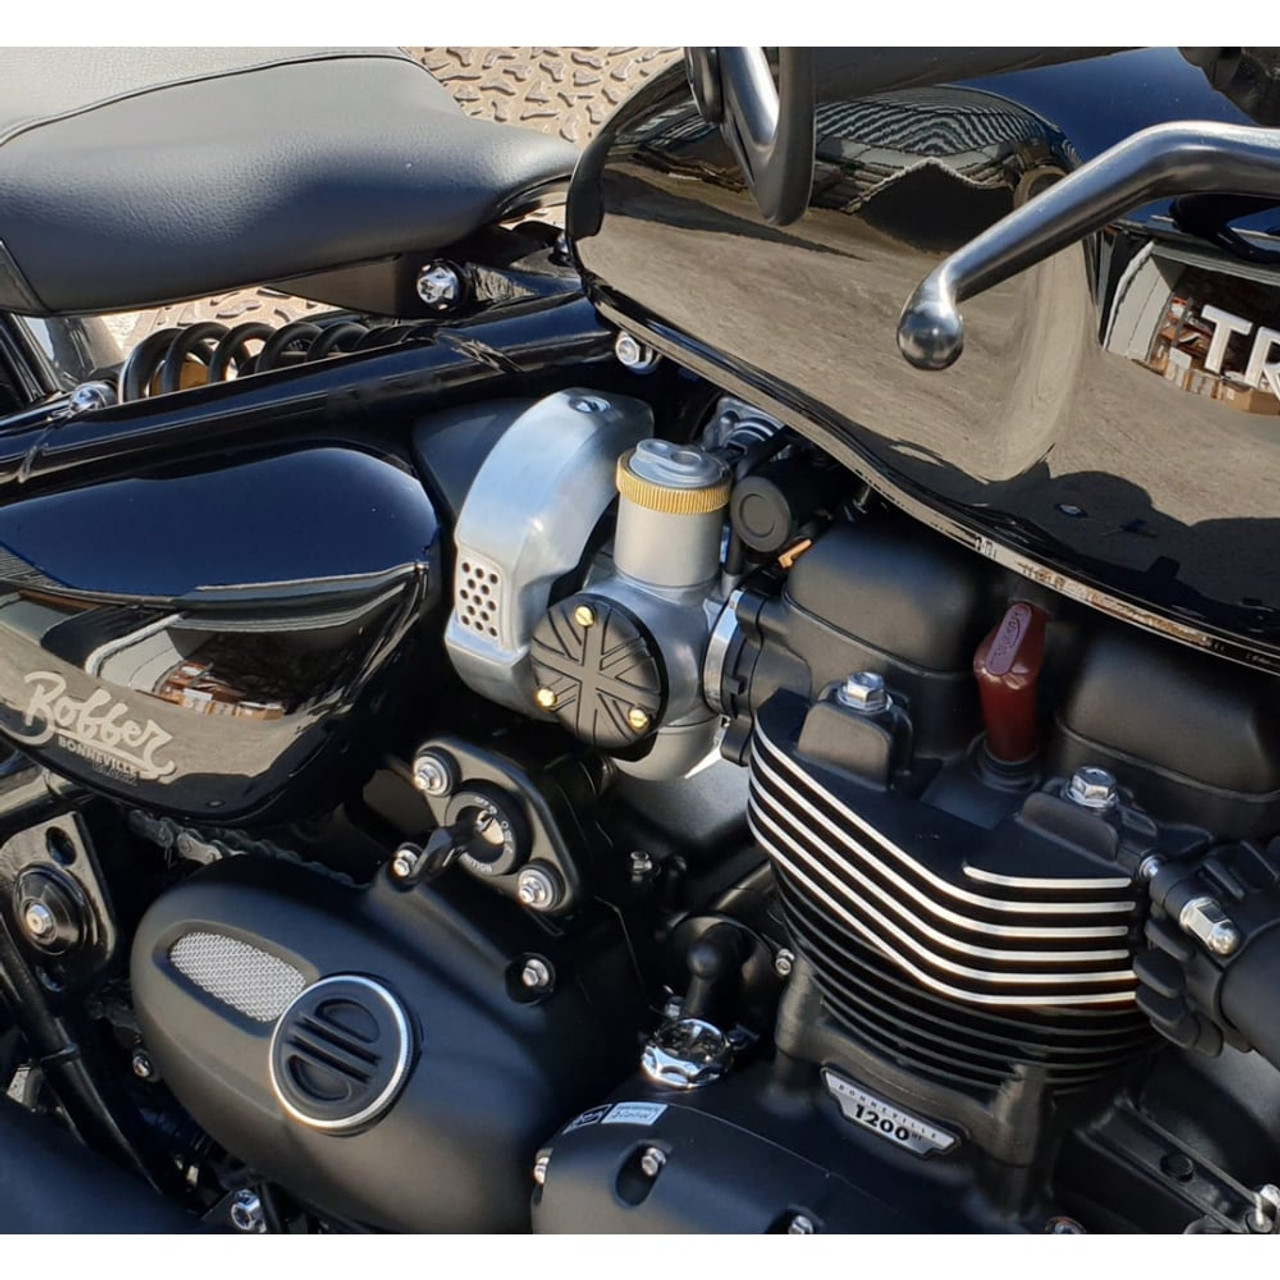 TPS Carb/Throttle Body Cover - Pair - Union Jack - Black